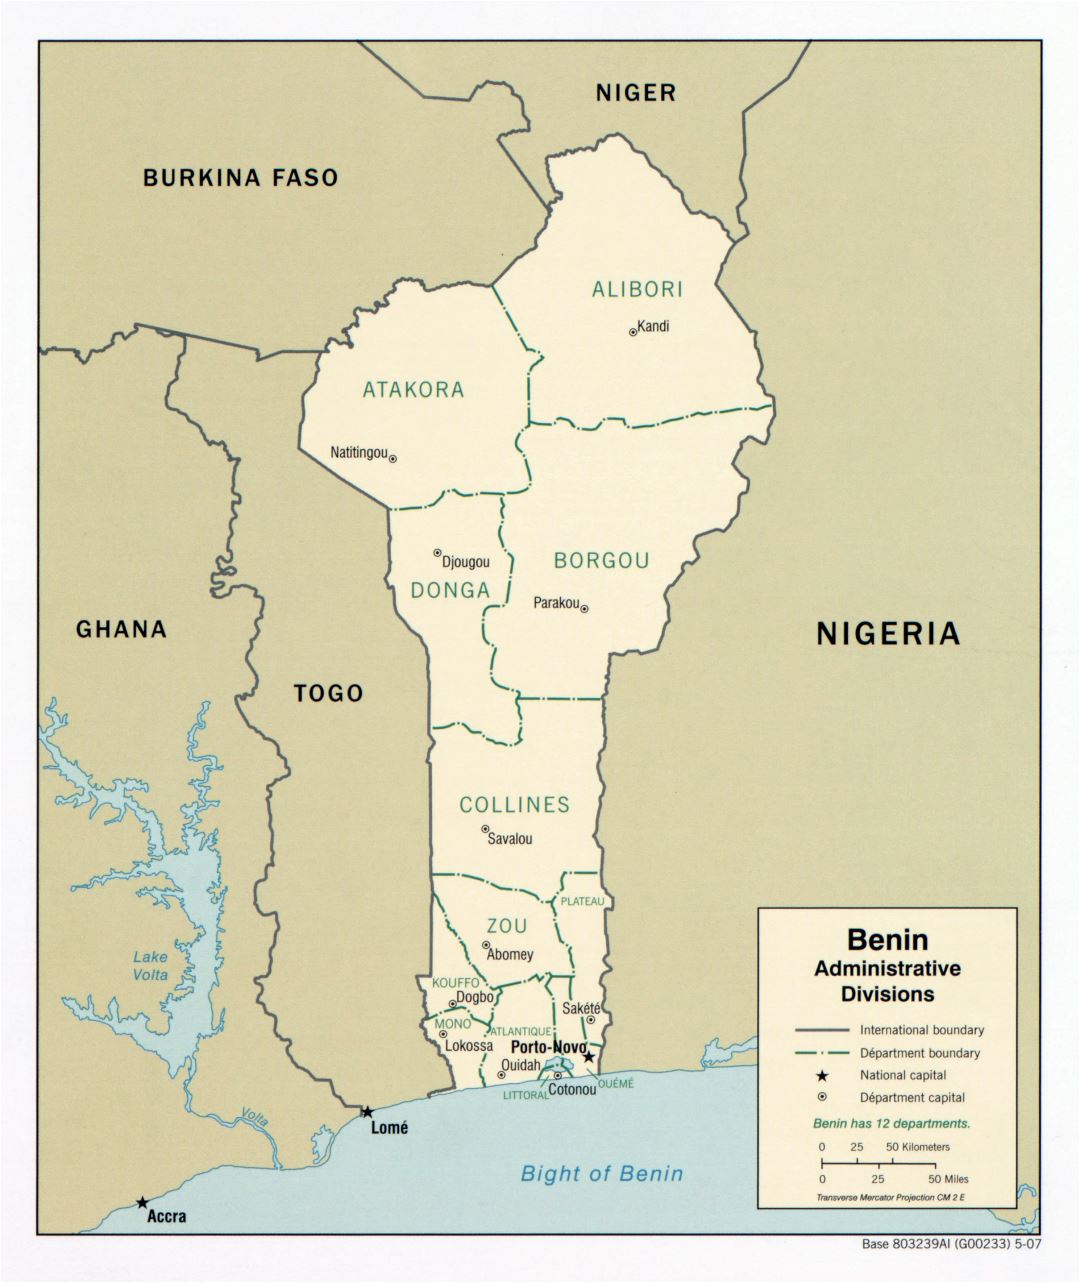 A gran escala mapa de administrativas divisiones de Benin - 2007